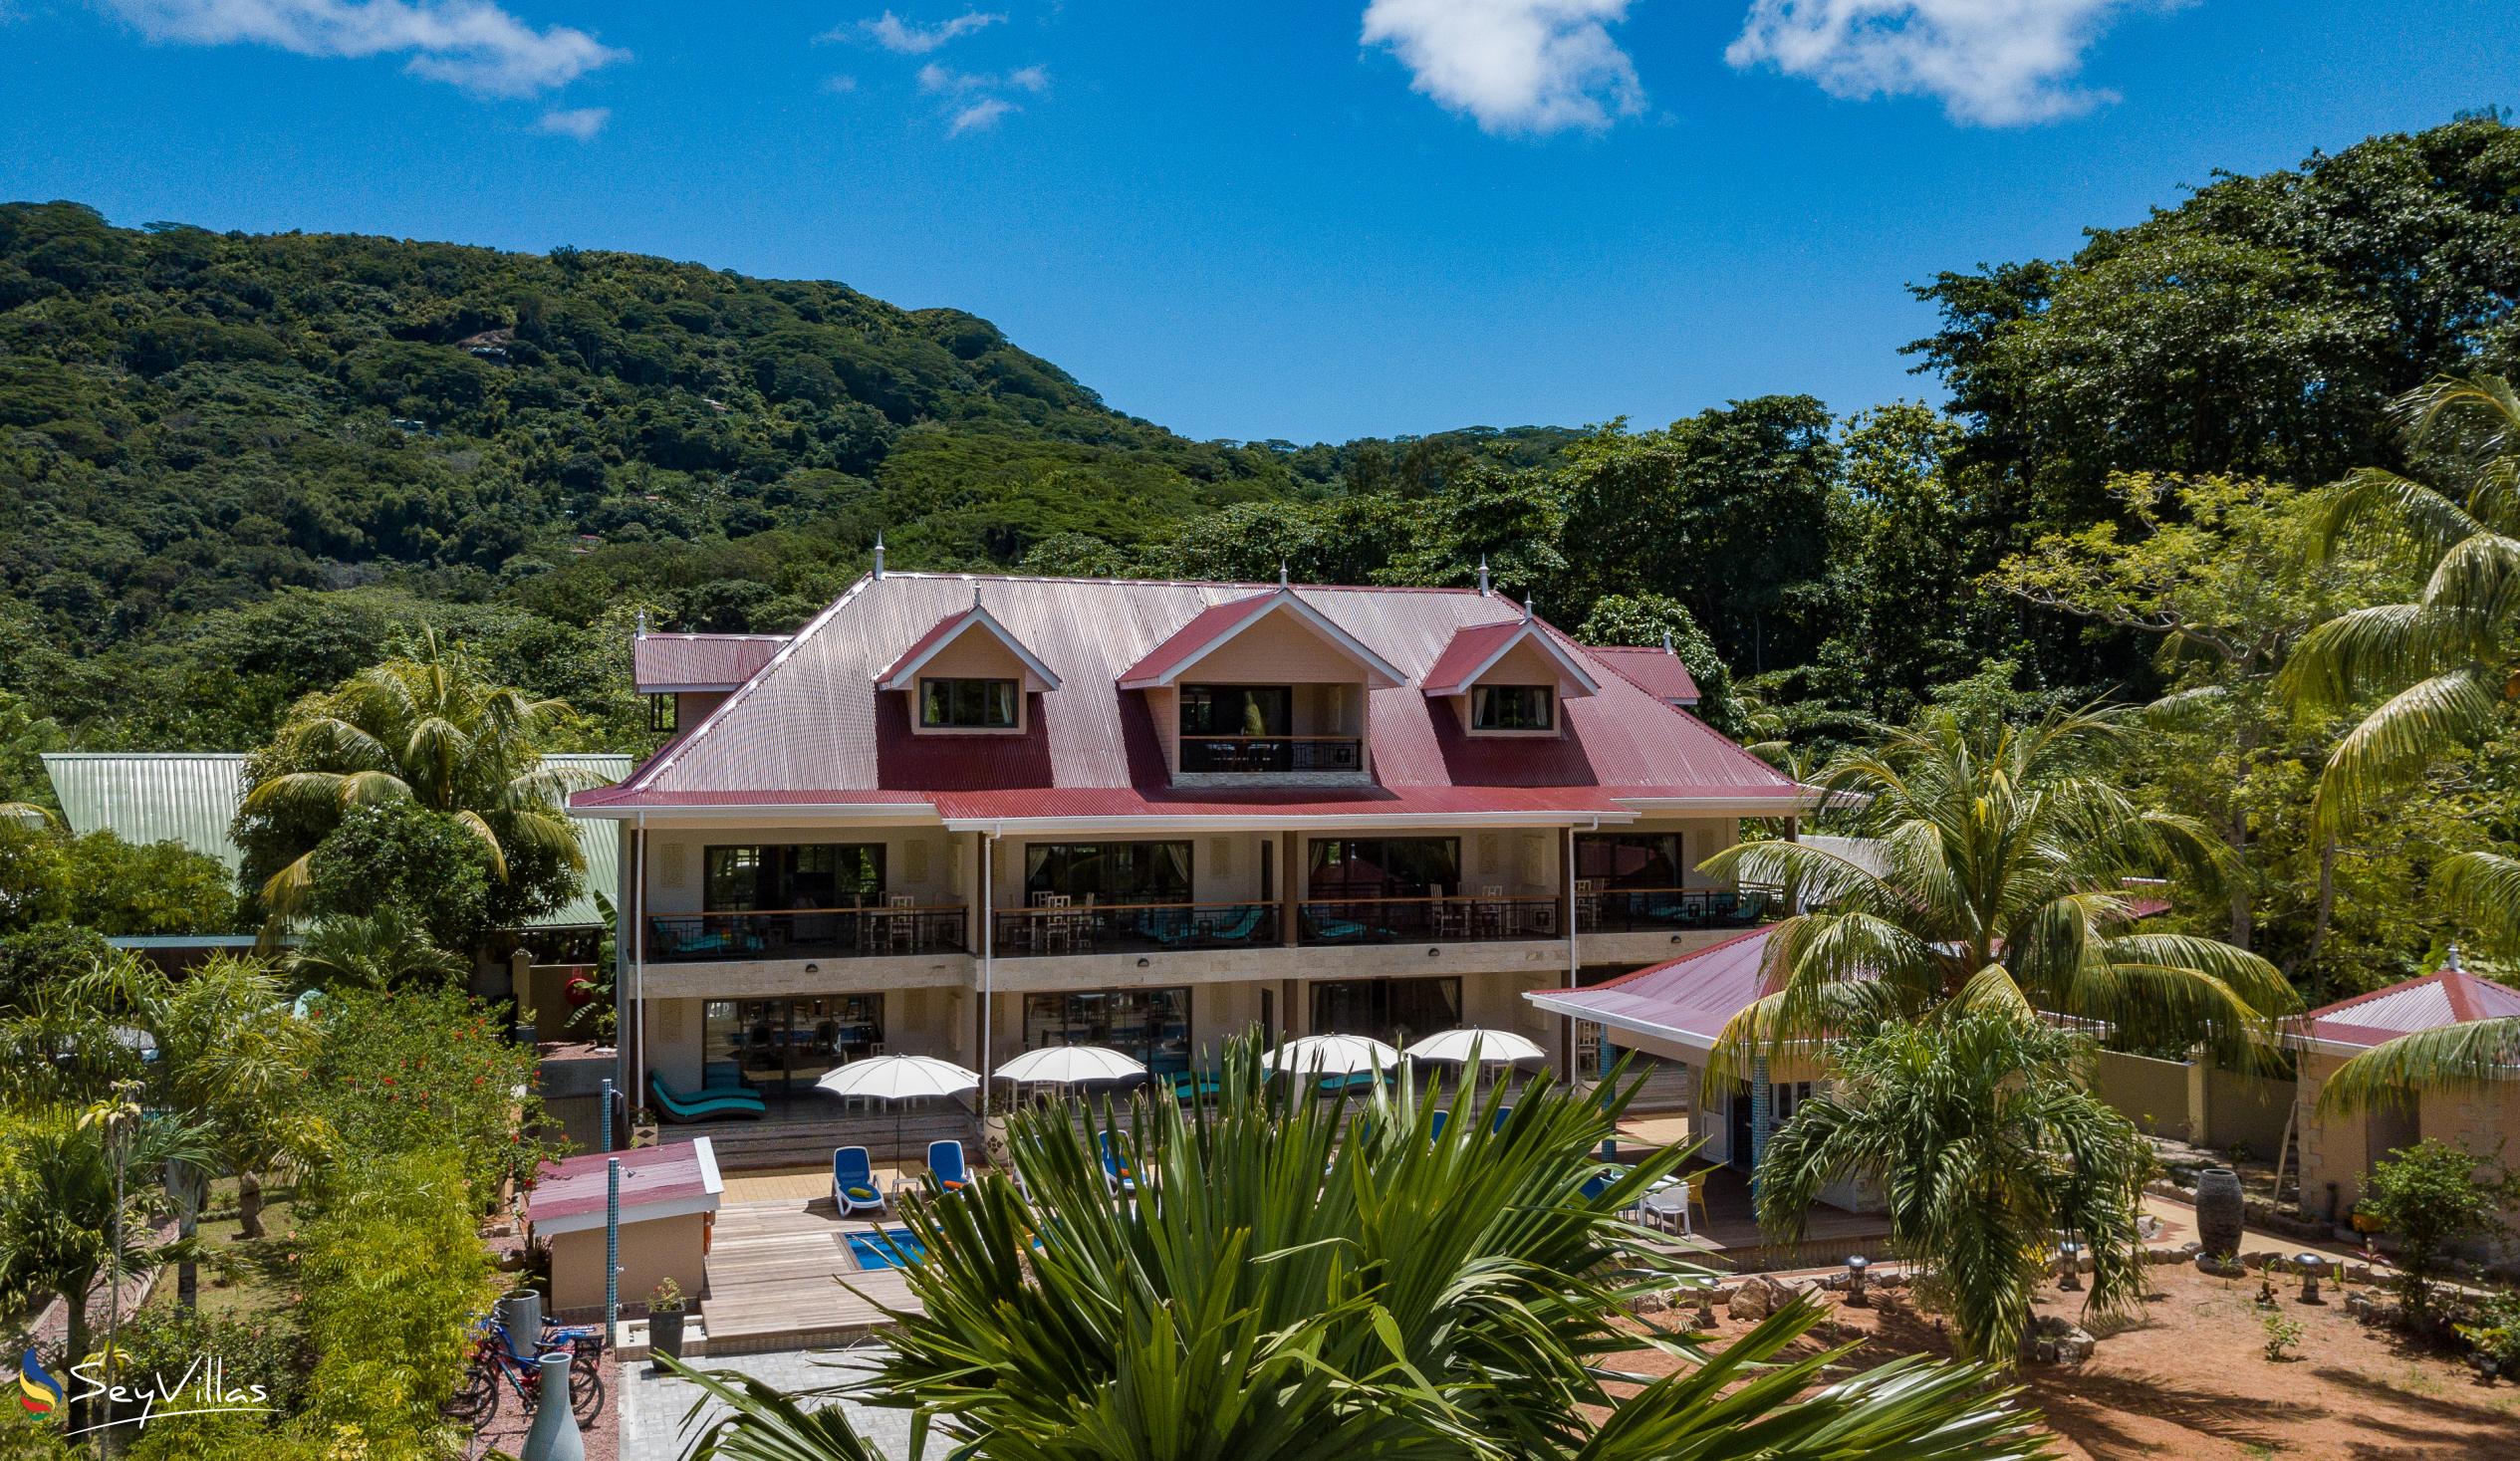 Foto 3: Casa de Leela - Aussenbereich - La Digue (Seychellen)